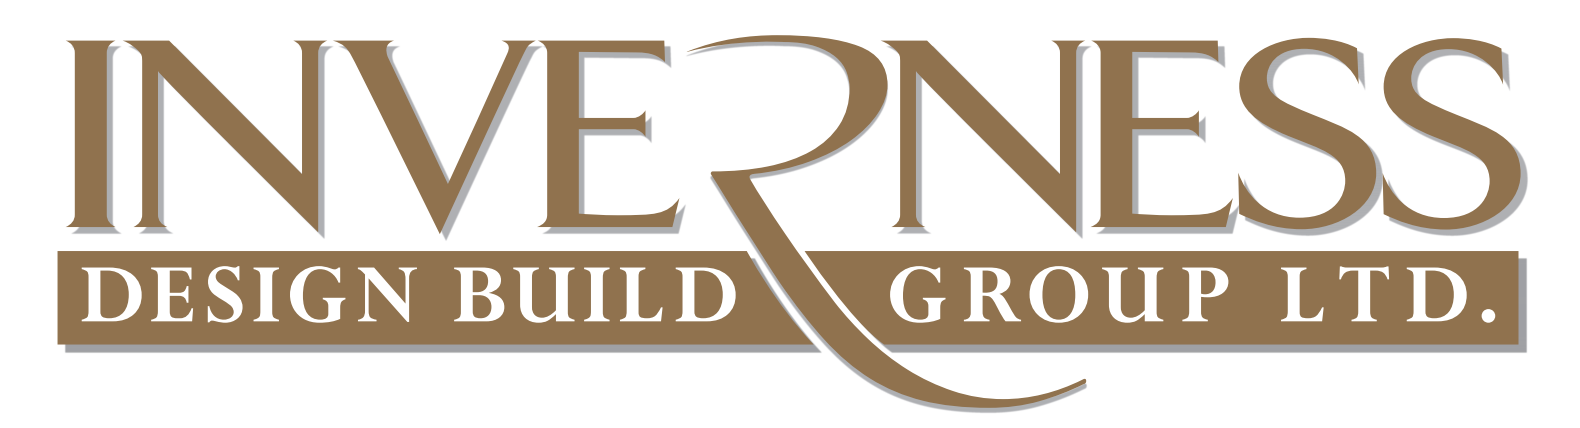 Inverness Design Build Group Ltd.'s logo